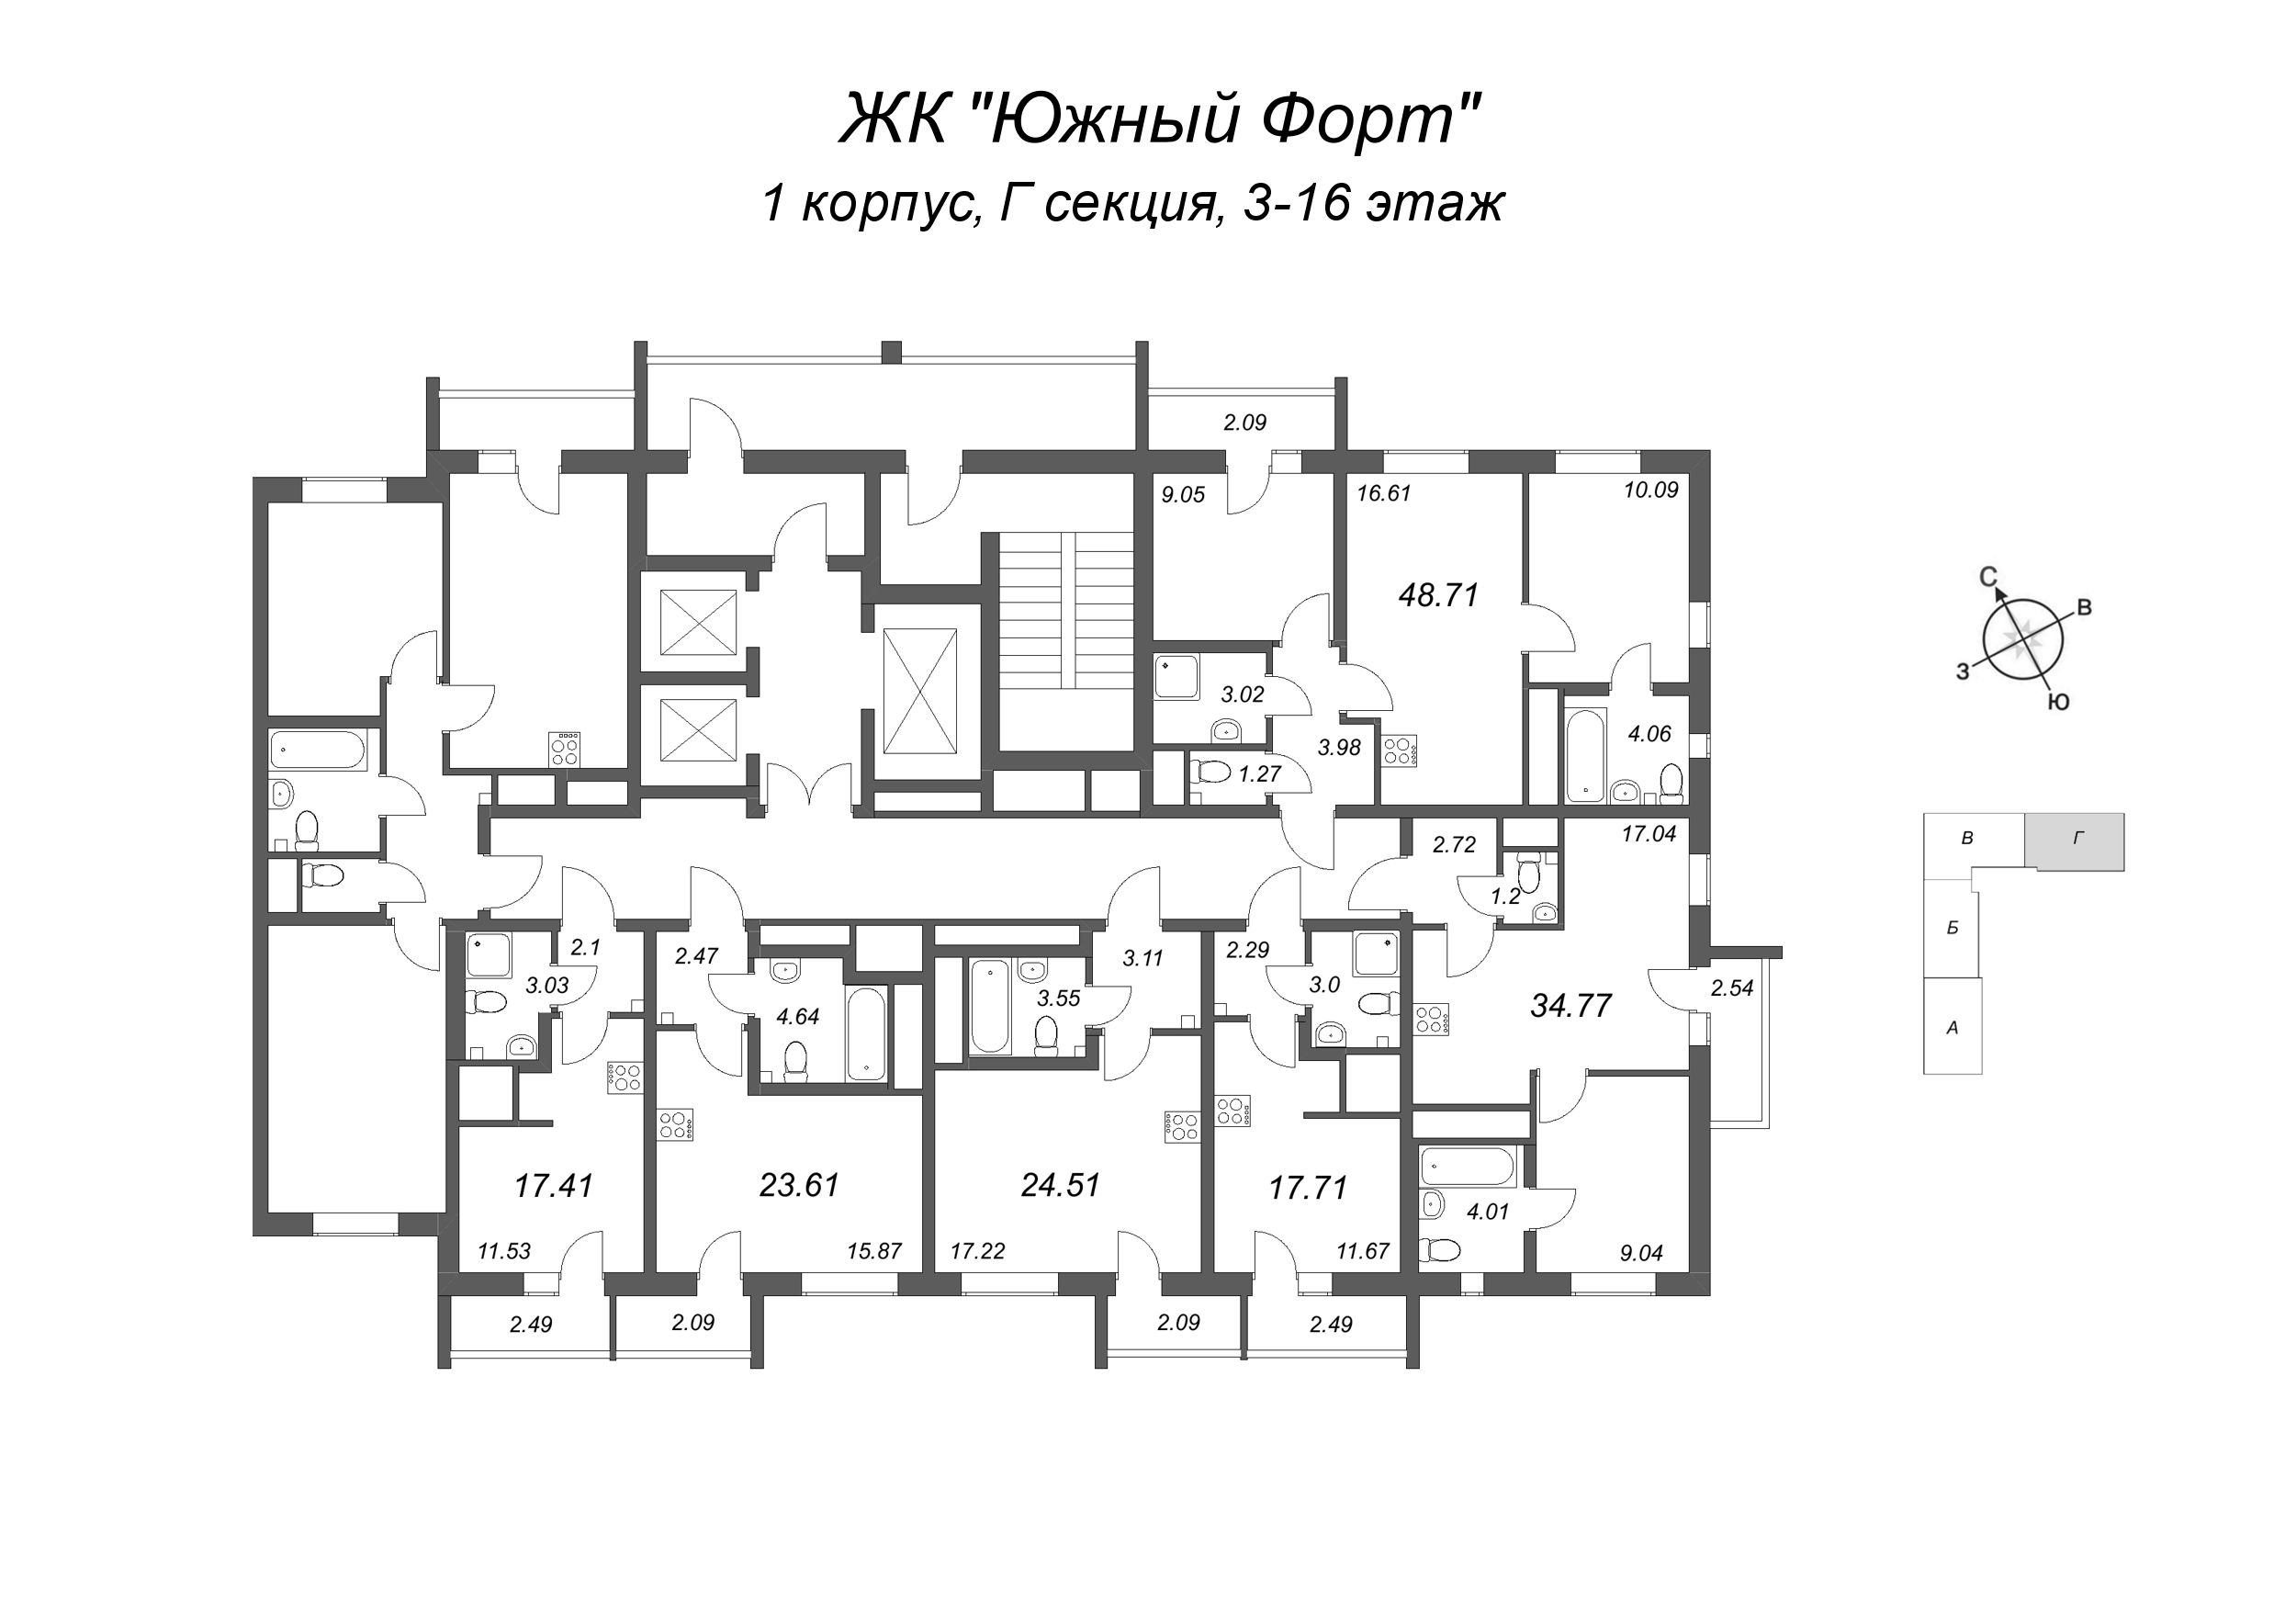 2-комнатная (Евро) квартира, 34.77 м² - планировка этажа